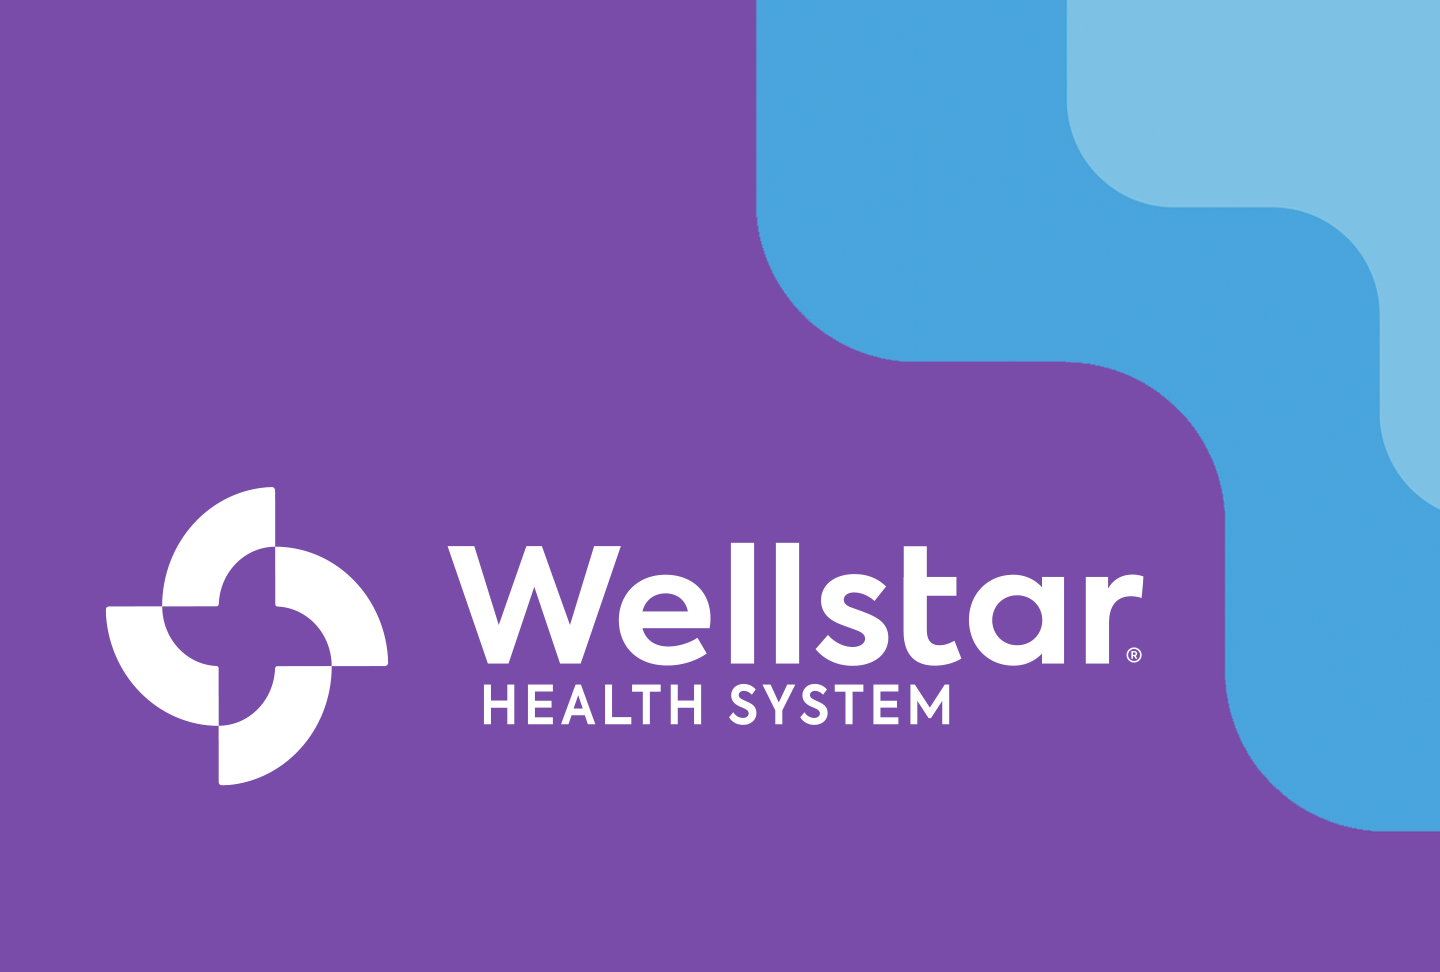 New Wellstar logo on purple background.